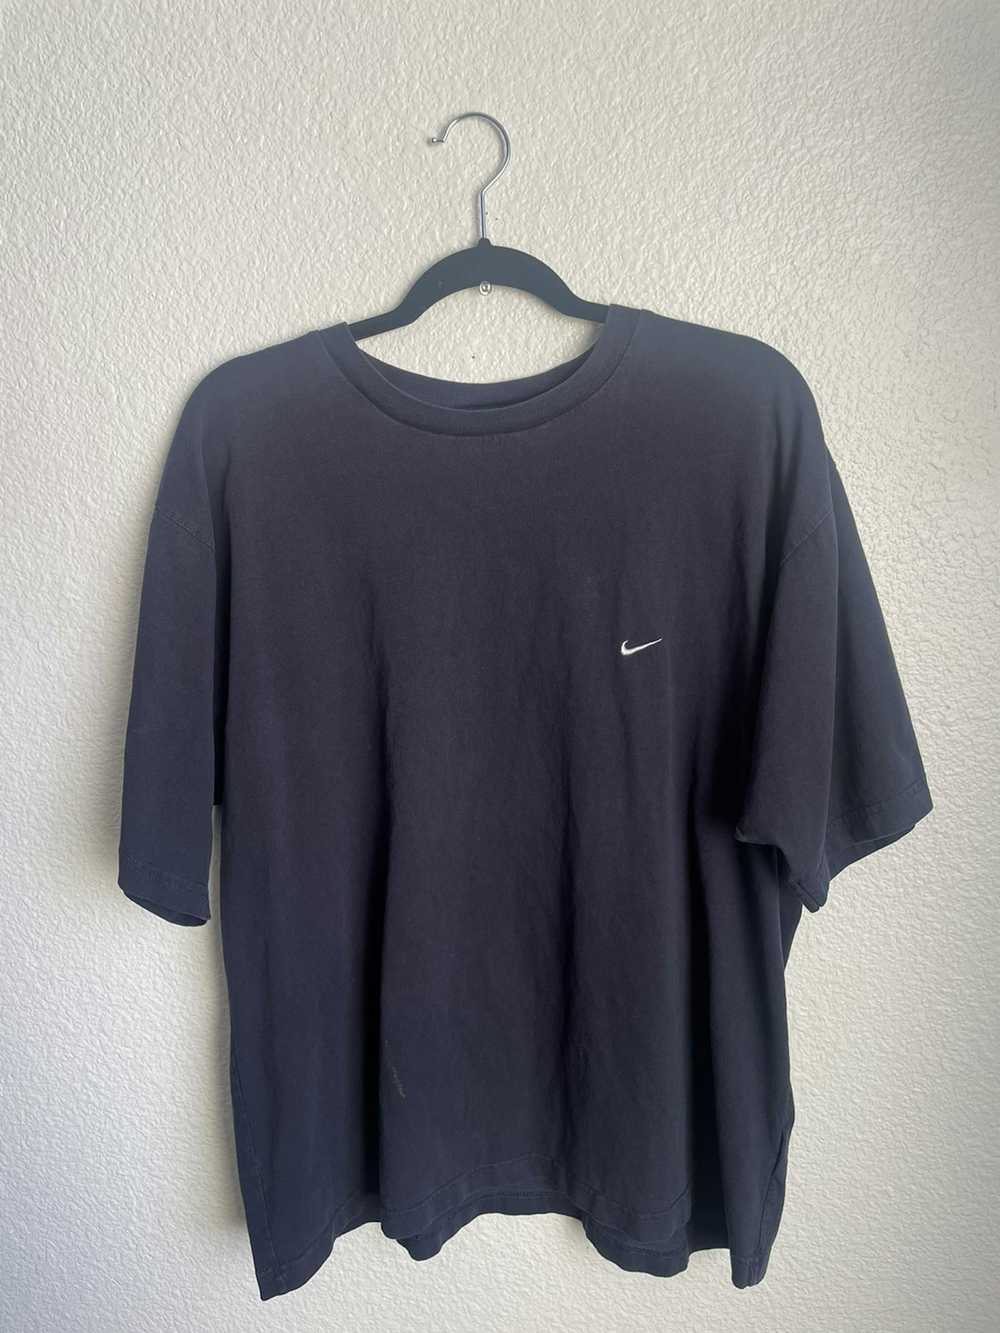 Nike Vintage 1990s Nike T Shirt Size XL - image 1